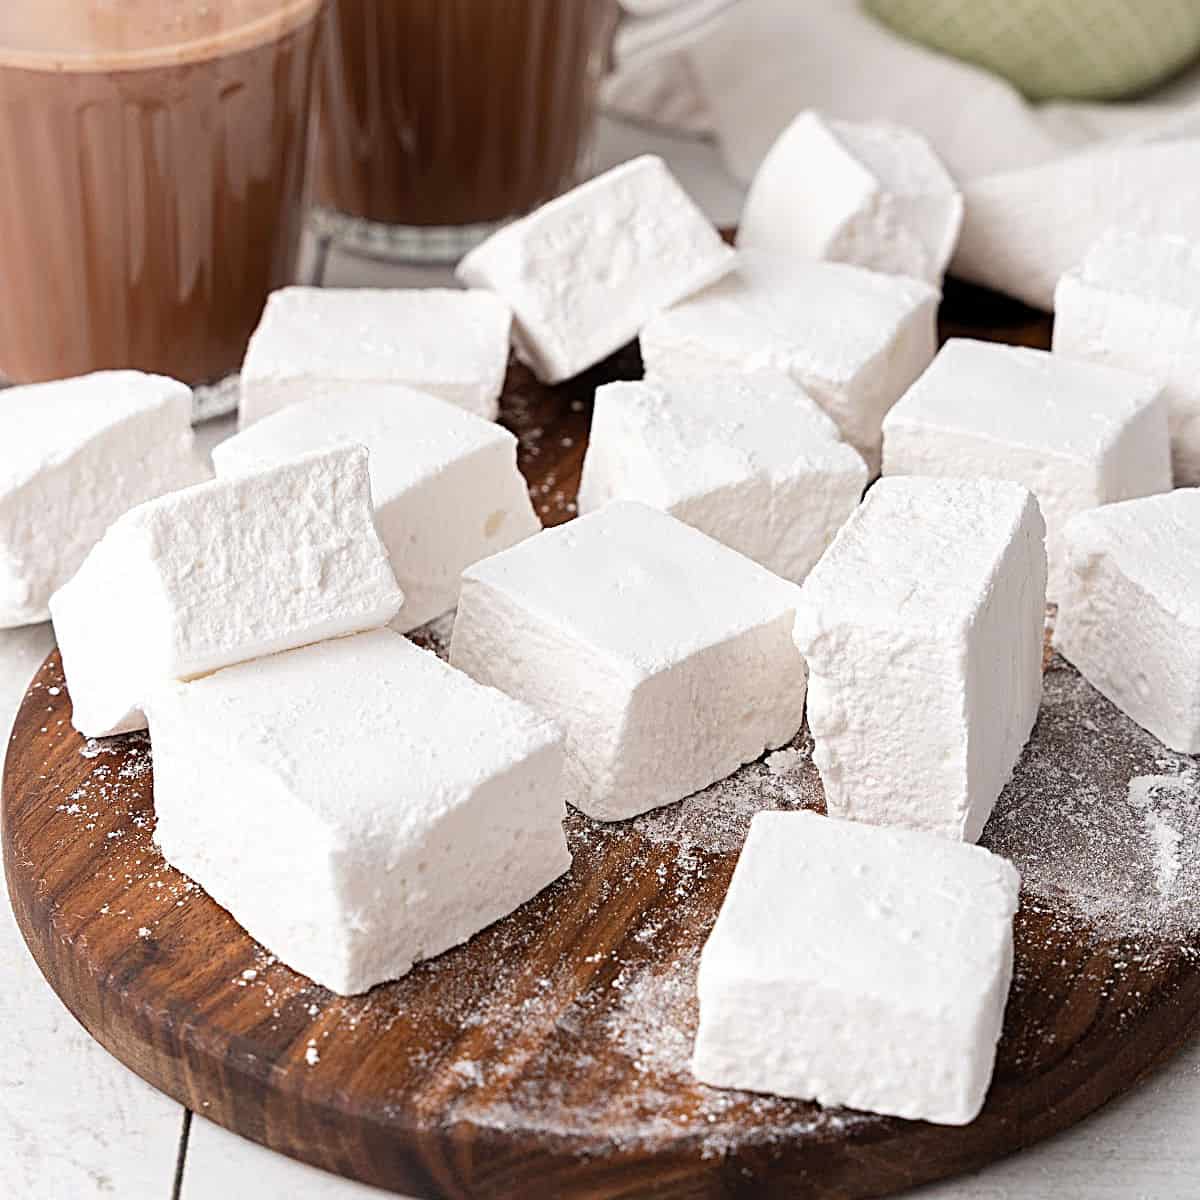 https://vintagekitchennotes.com/wp-content/uploads/2013/04/homemade-marshmallows-on-a-wooden-plate.jpeg